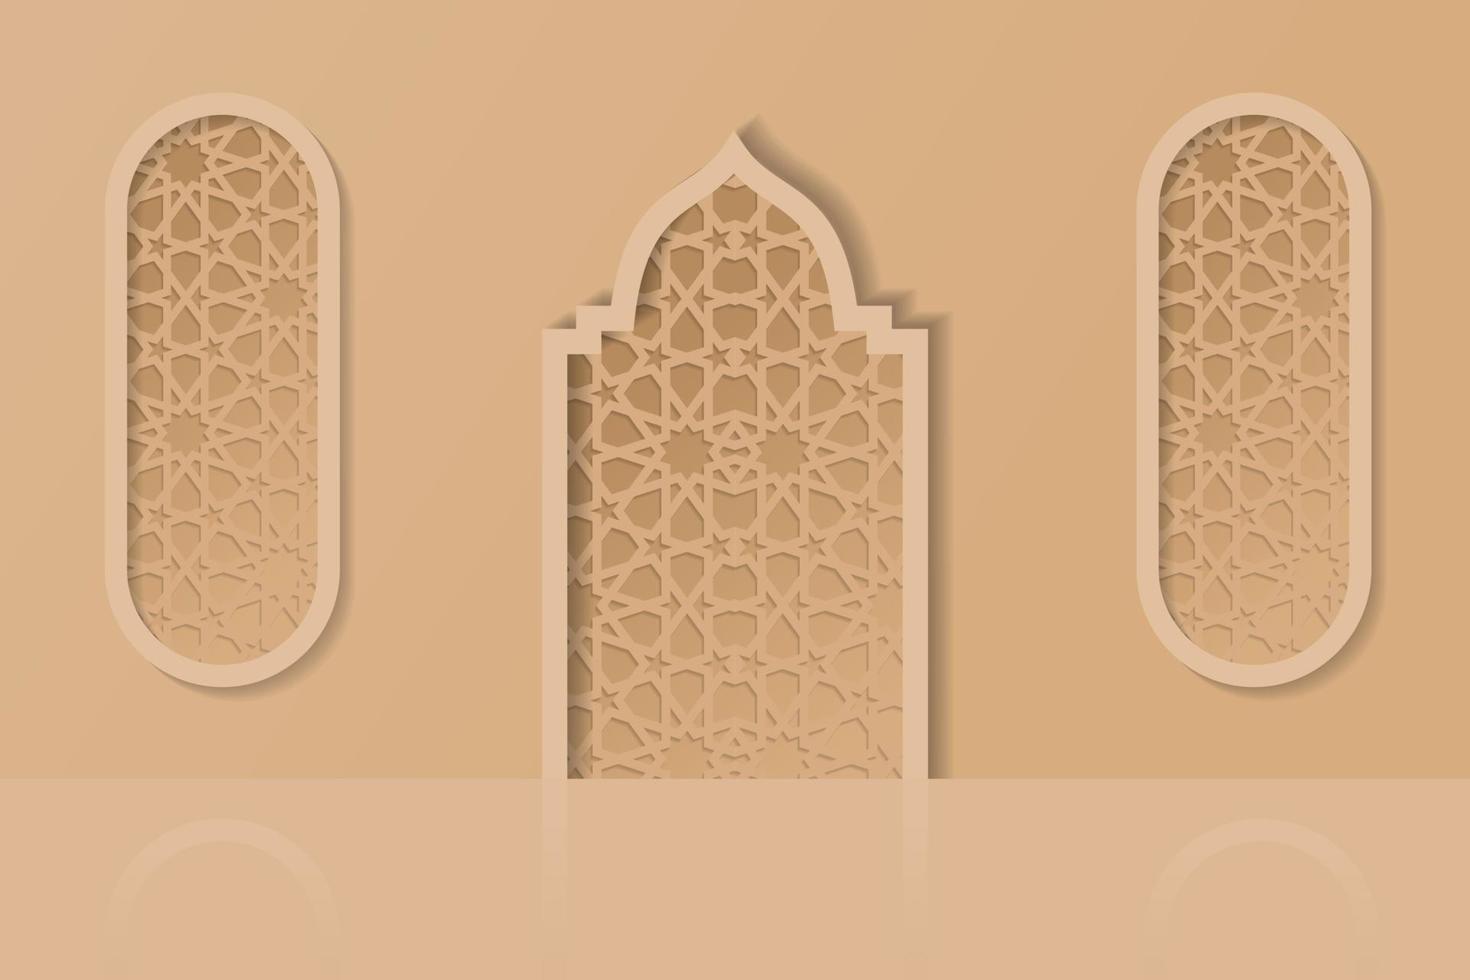 capa islâmica, fundo do eid do ramadã vetor